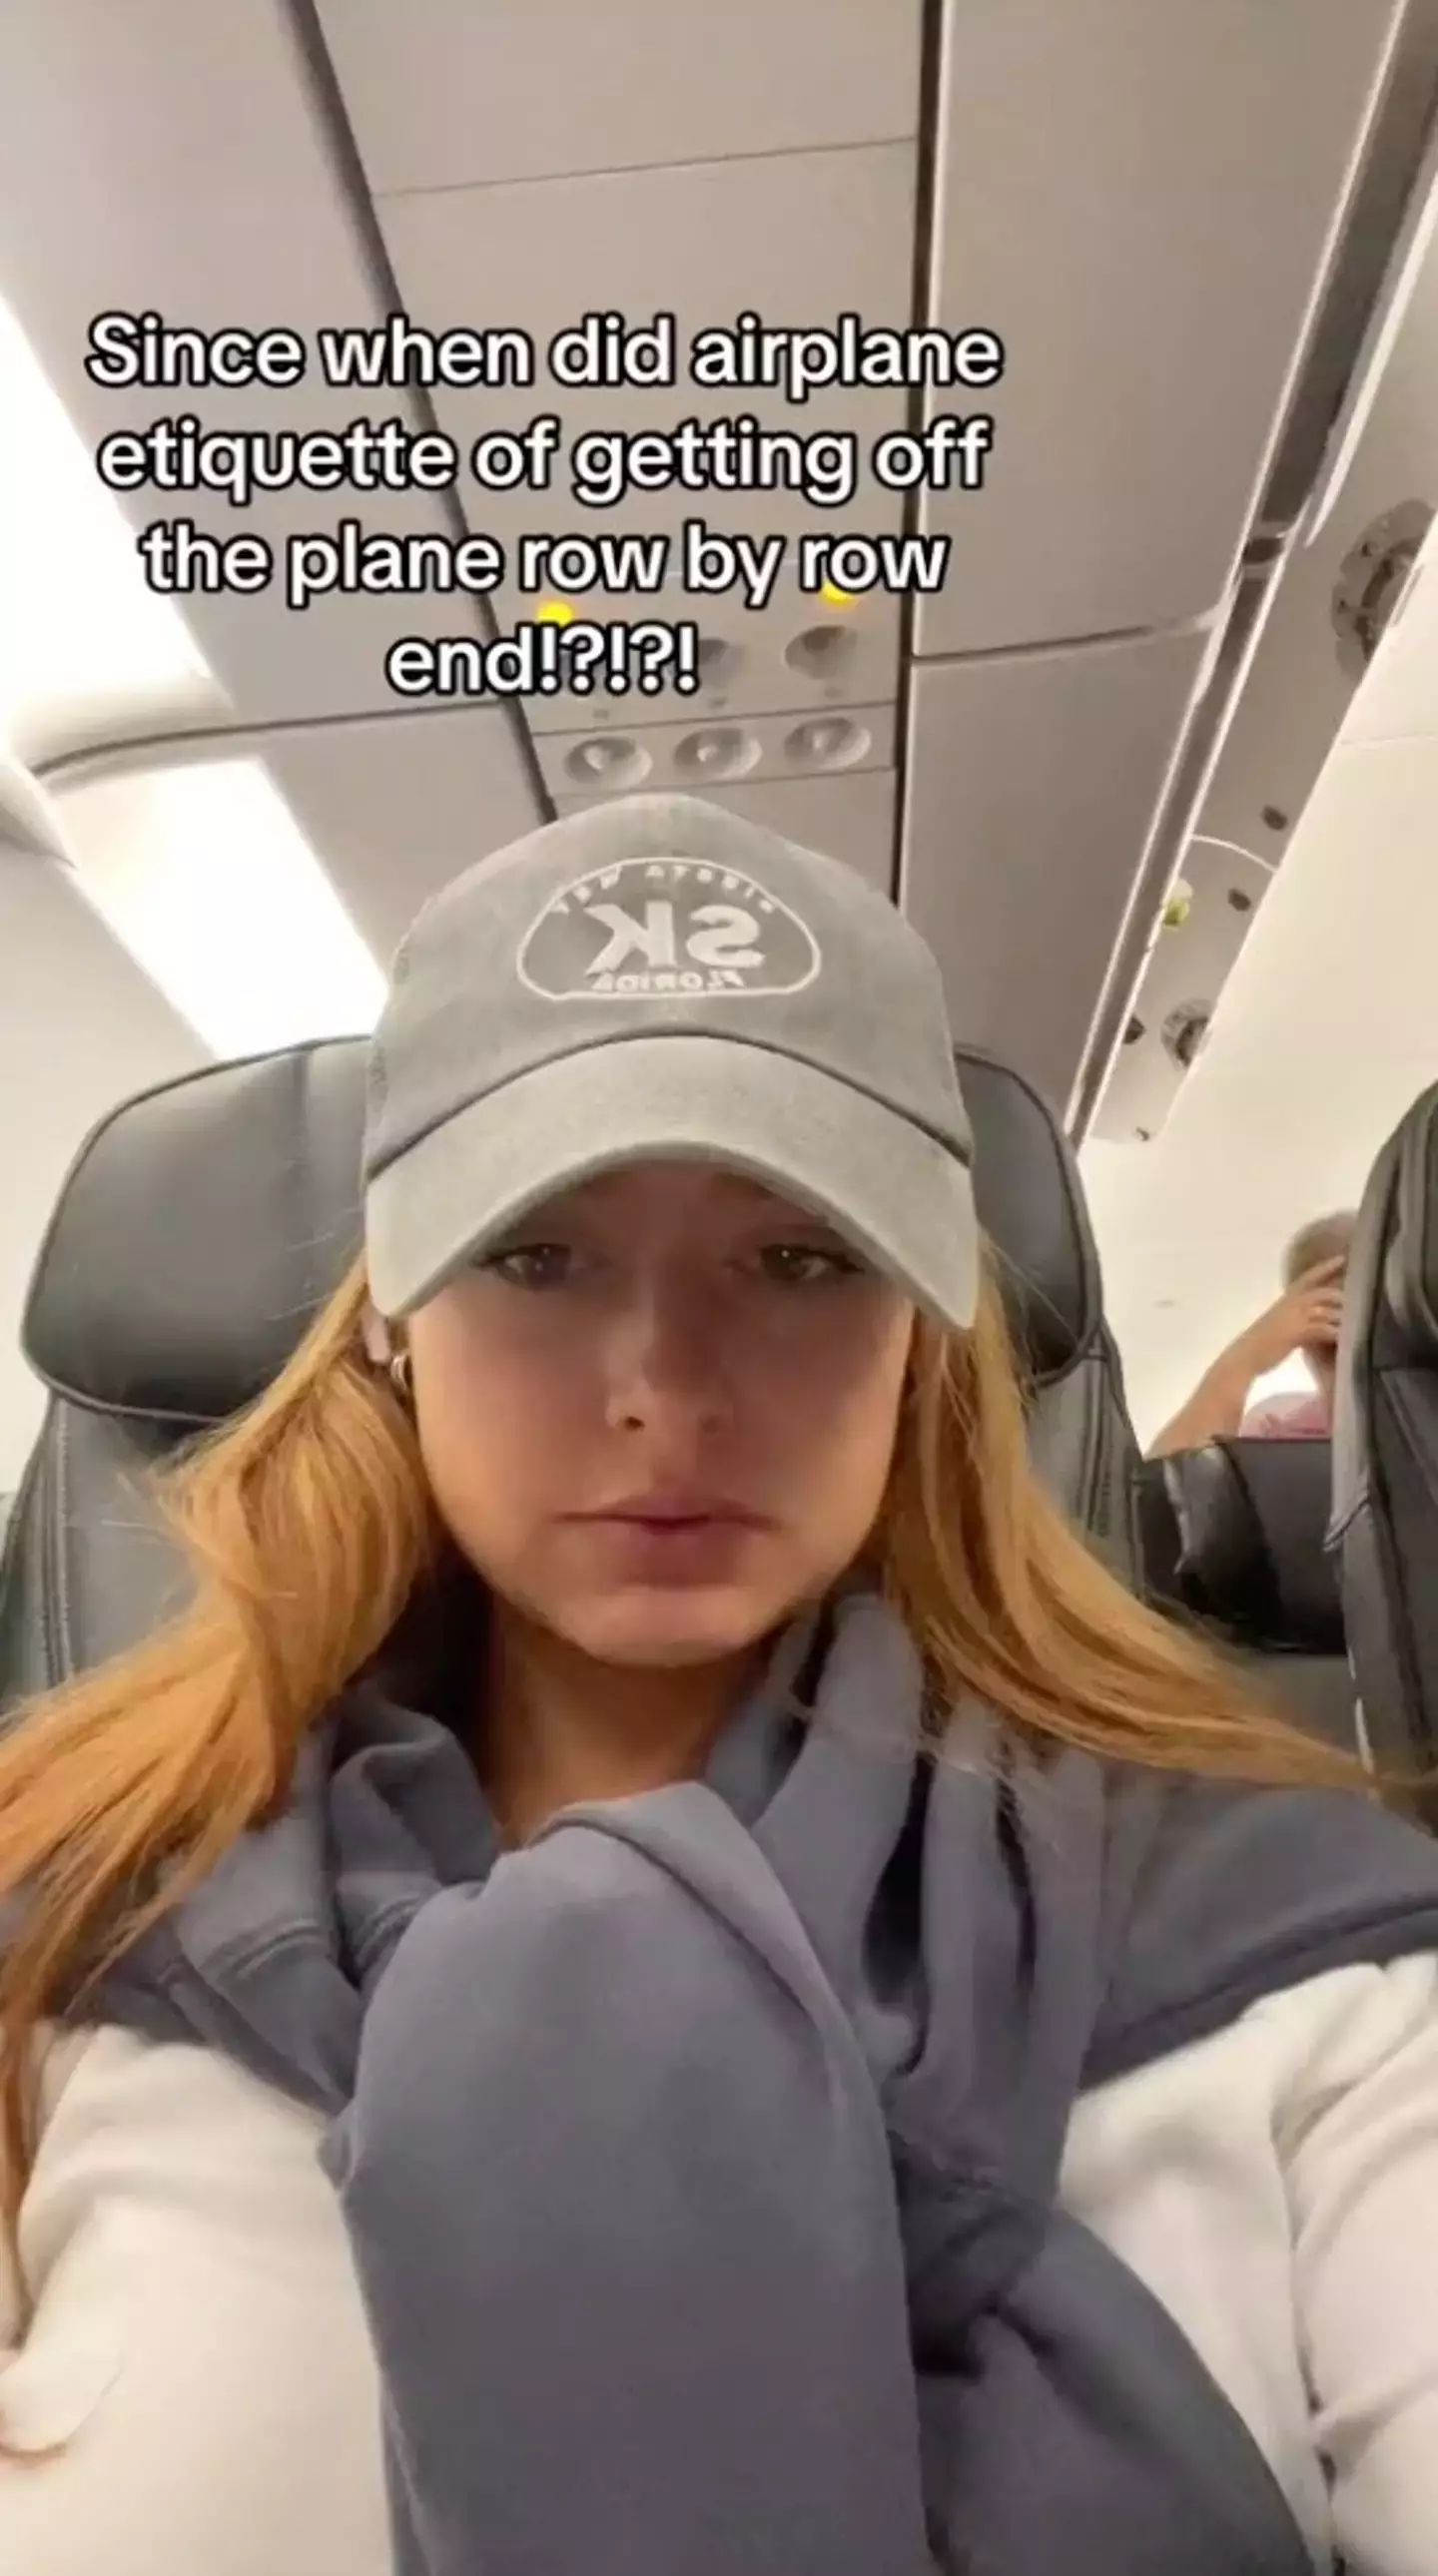 Mikayla took to TikTok to share her pet peeve during her flight. (TikTok/@mickeyyyt)